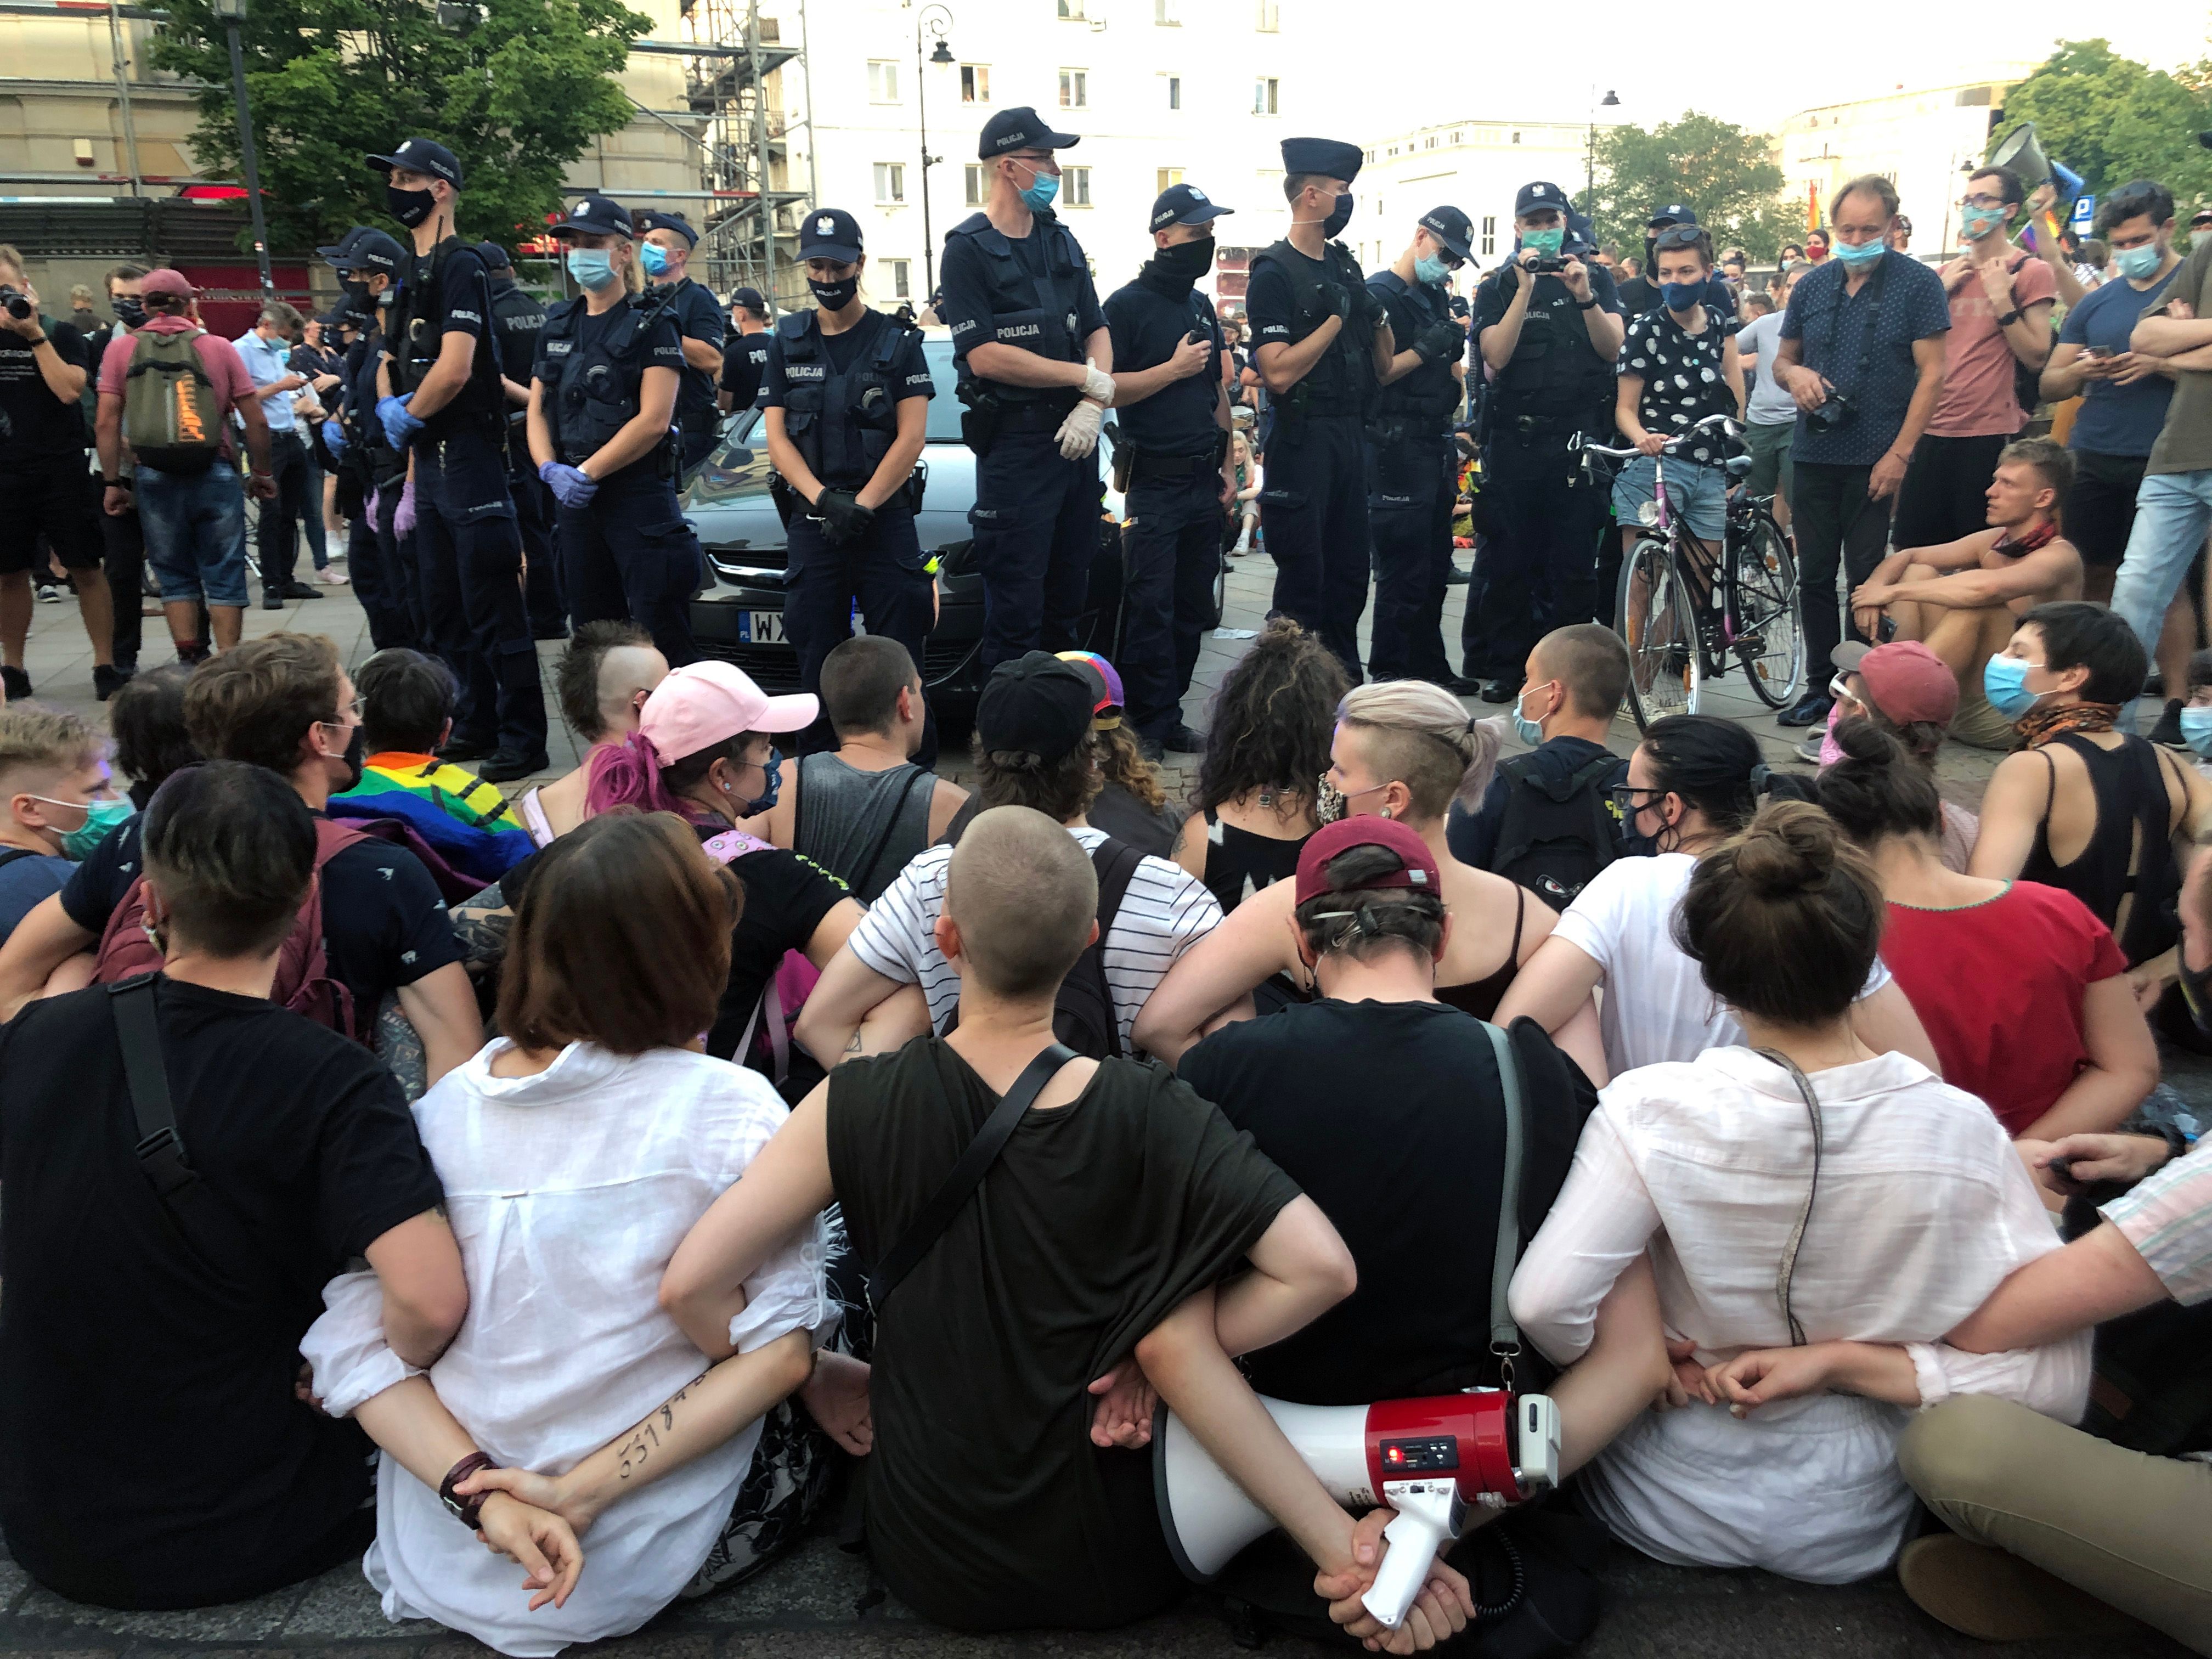 Culture figures unite against mounting anti-LGBTQ sentiment in Poland